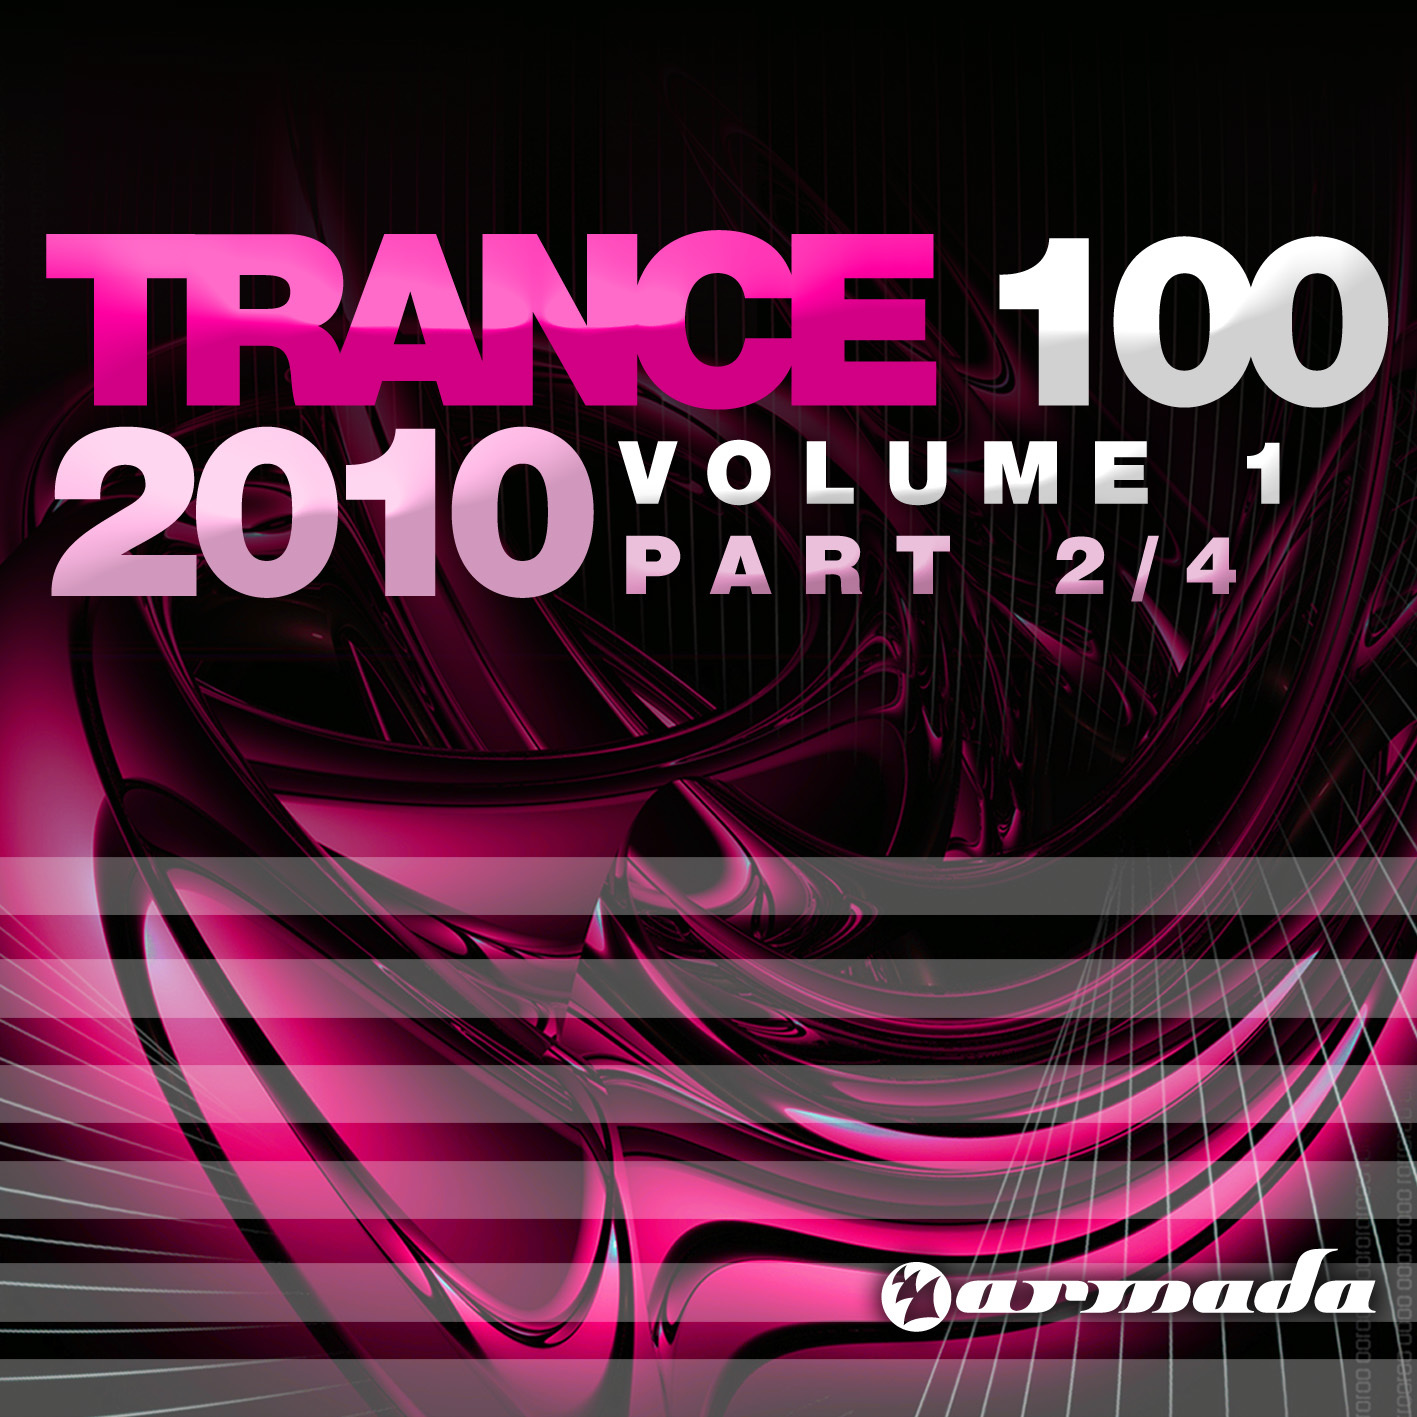 Trance 100 - 2010, Vol. 1